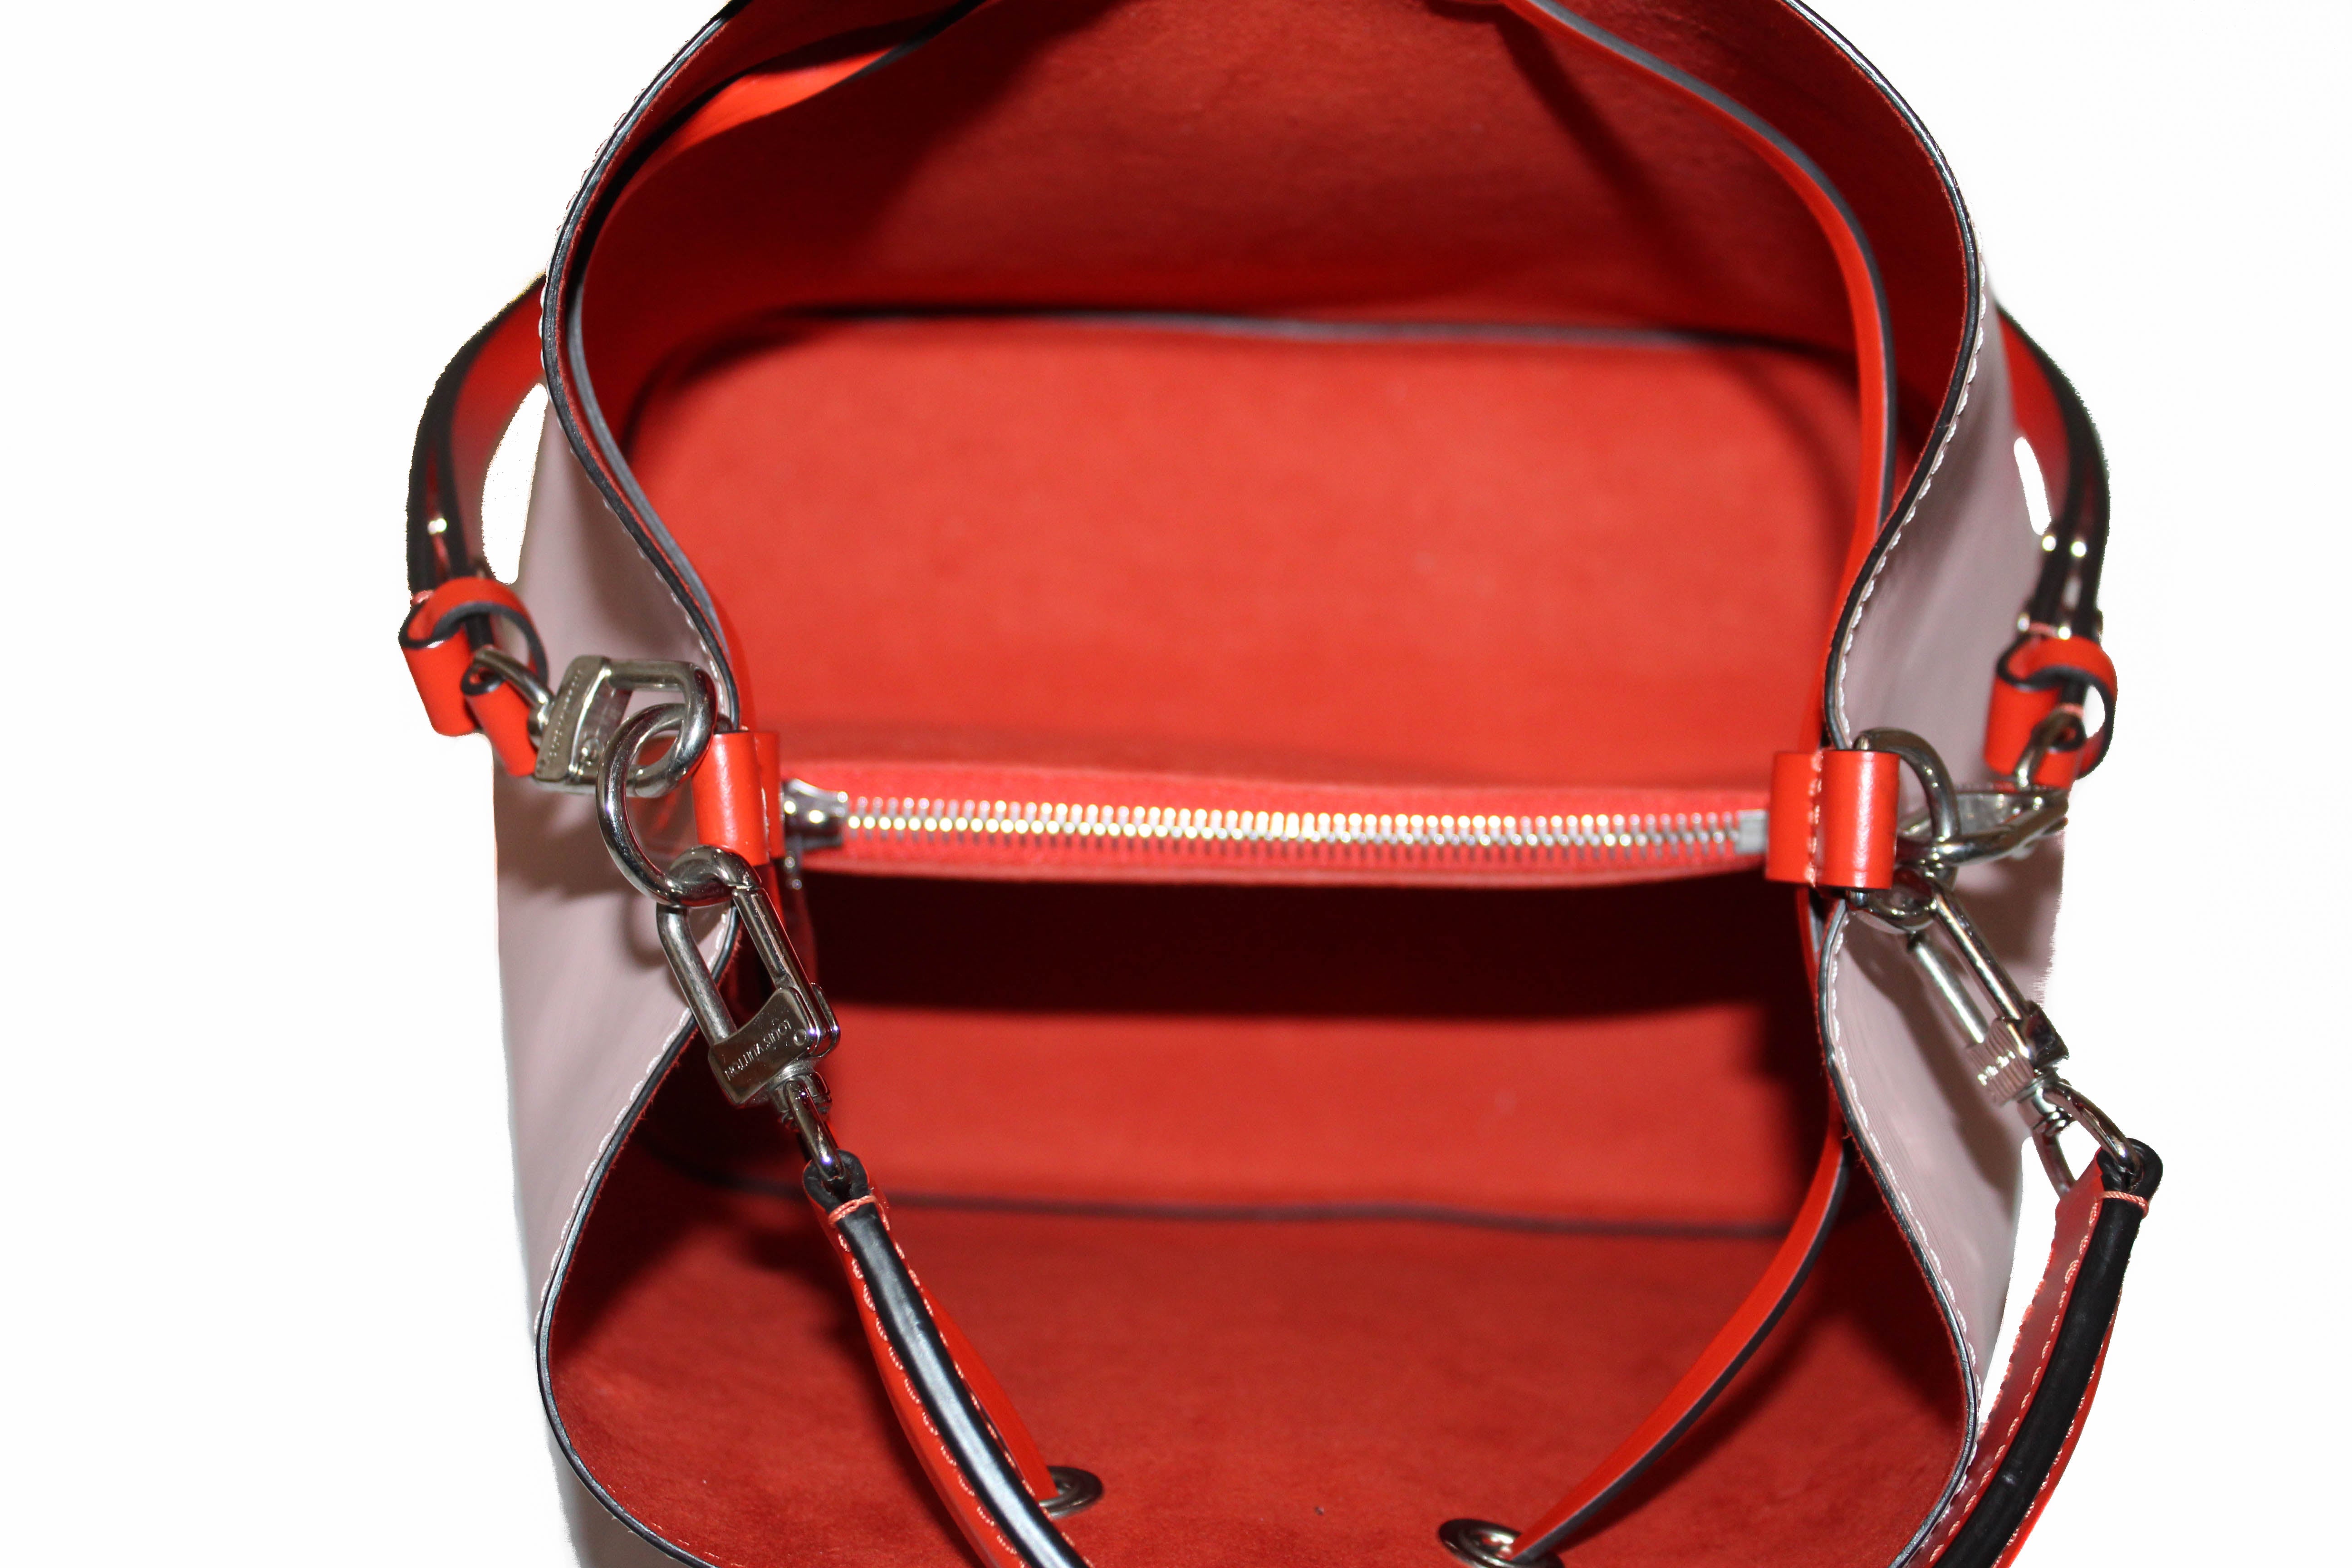 Auth LOUIS VUITTON Epi Neo Noe MM Pink Orange Bucket Shoulder Bag